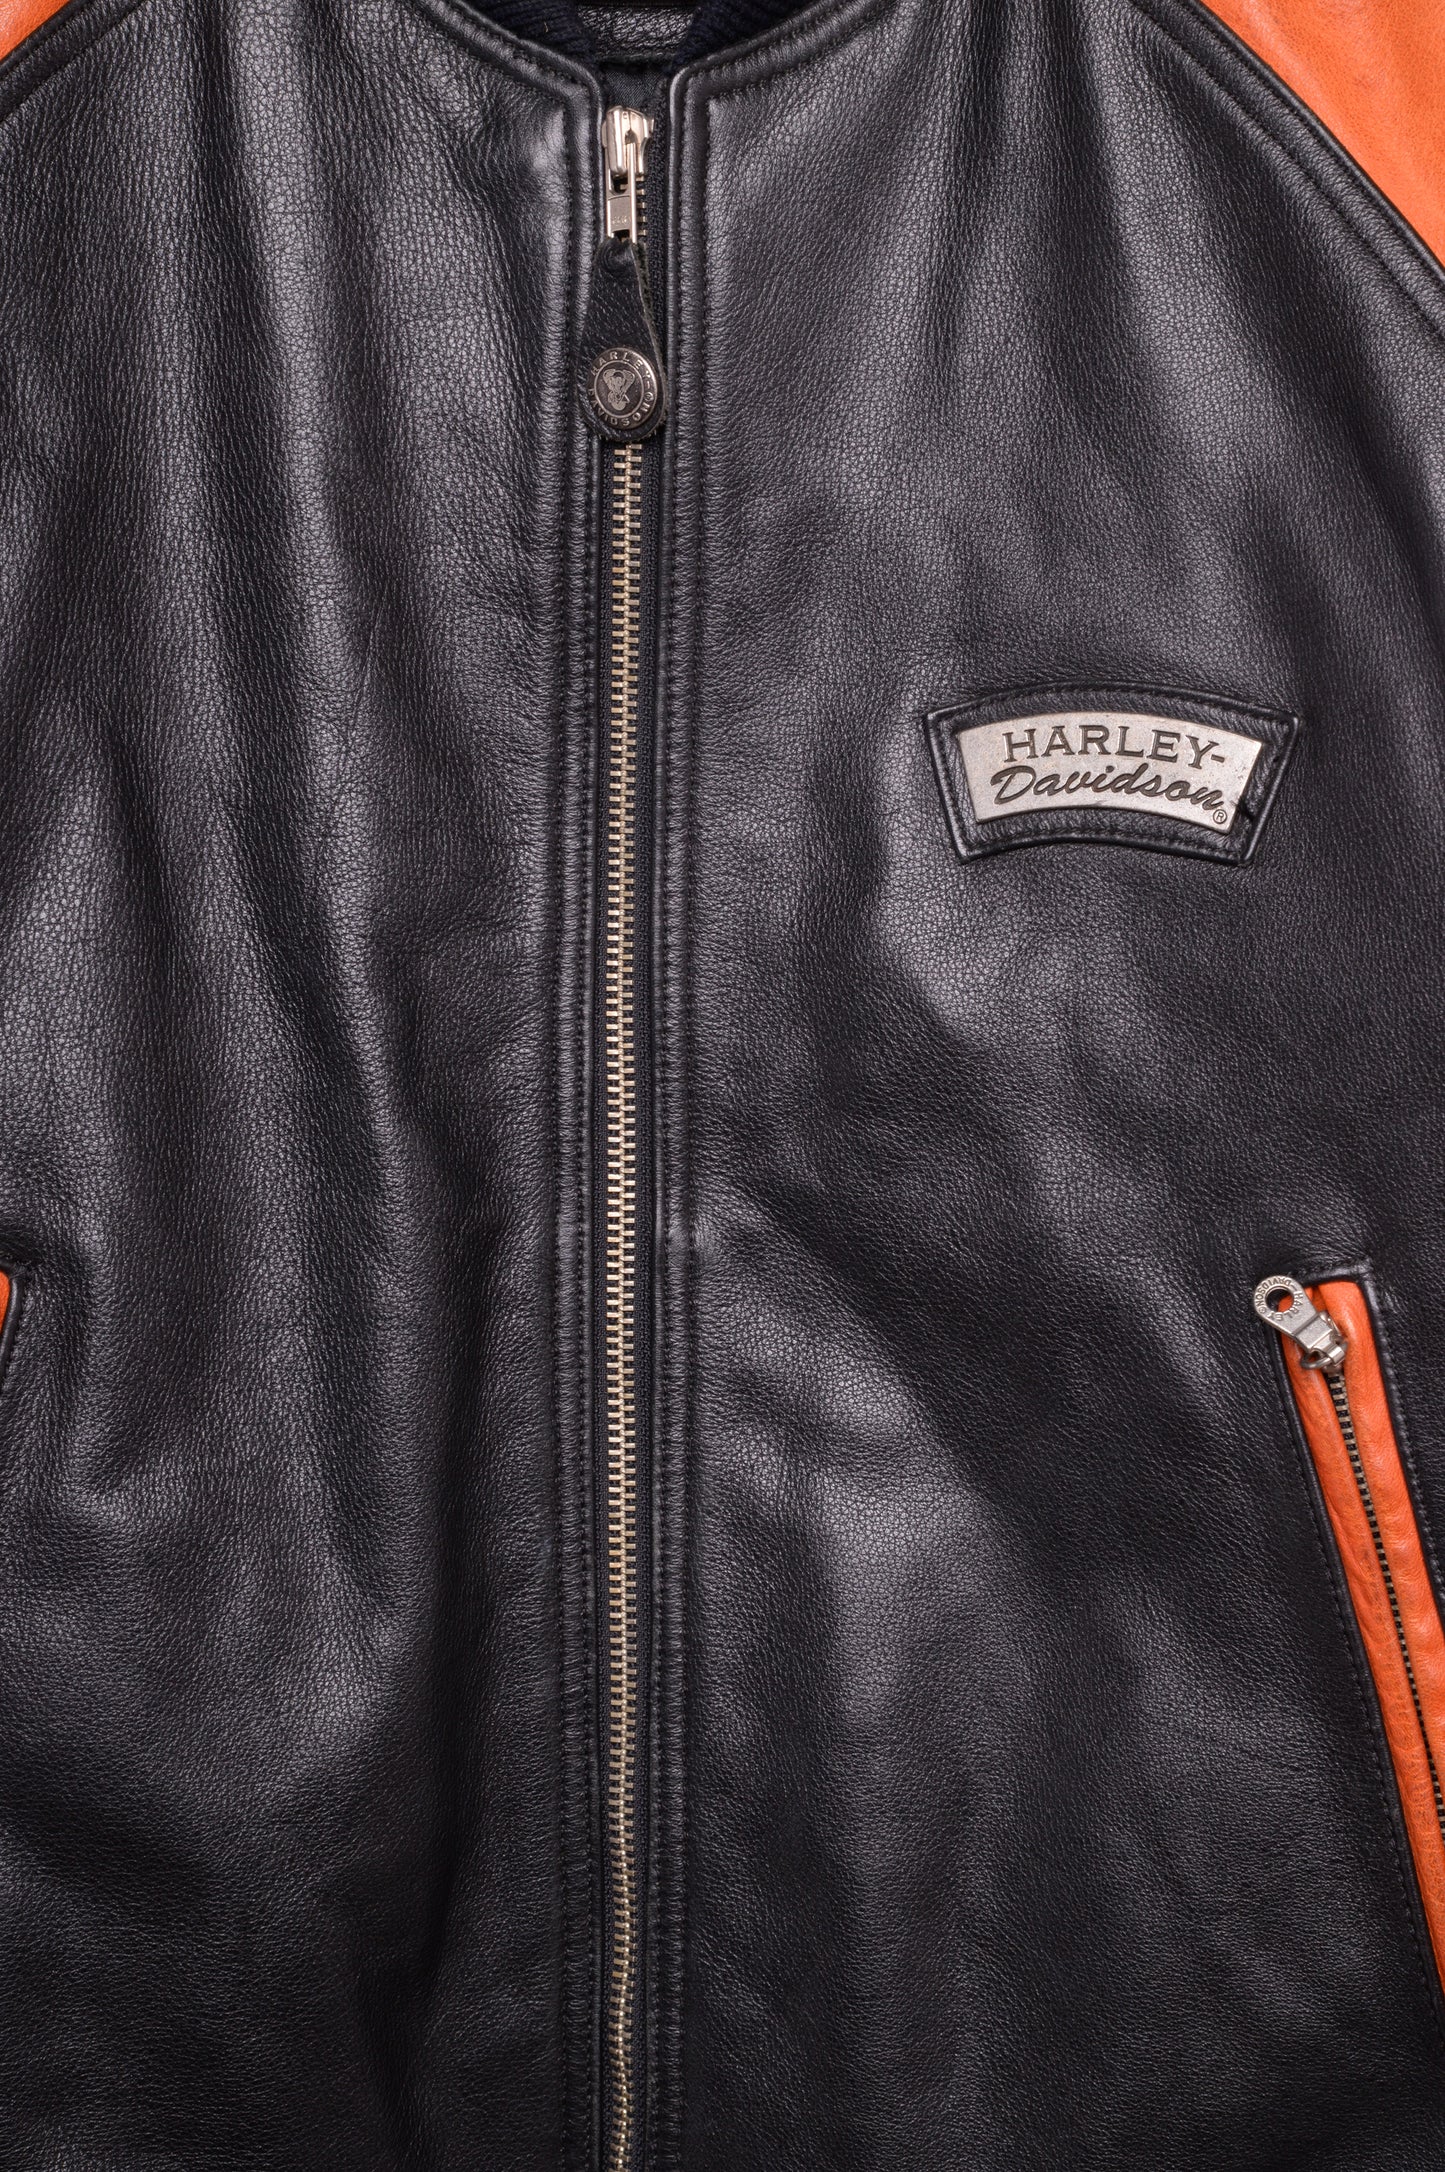 Harley Davidson Leather Bomber Jacket